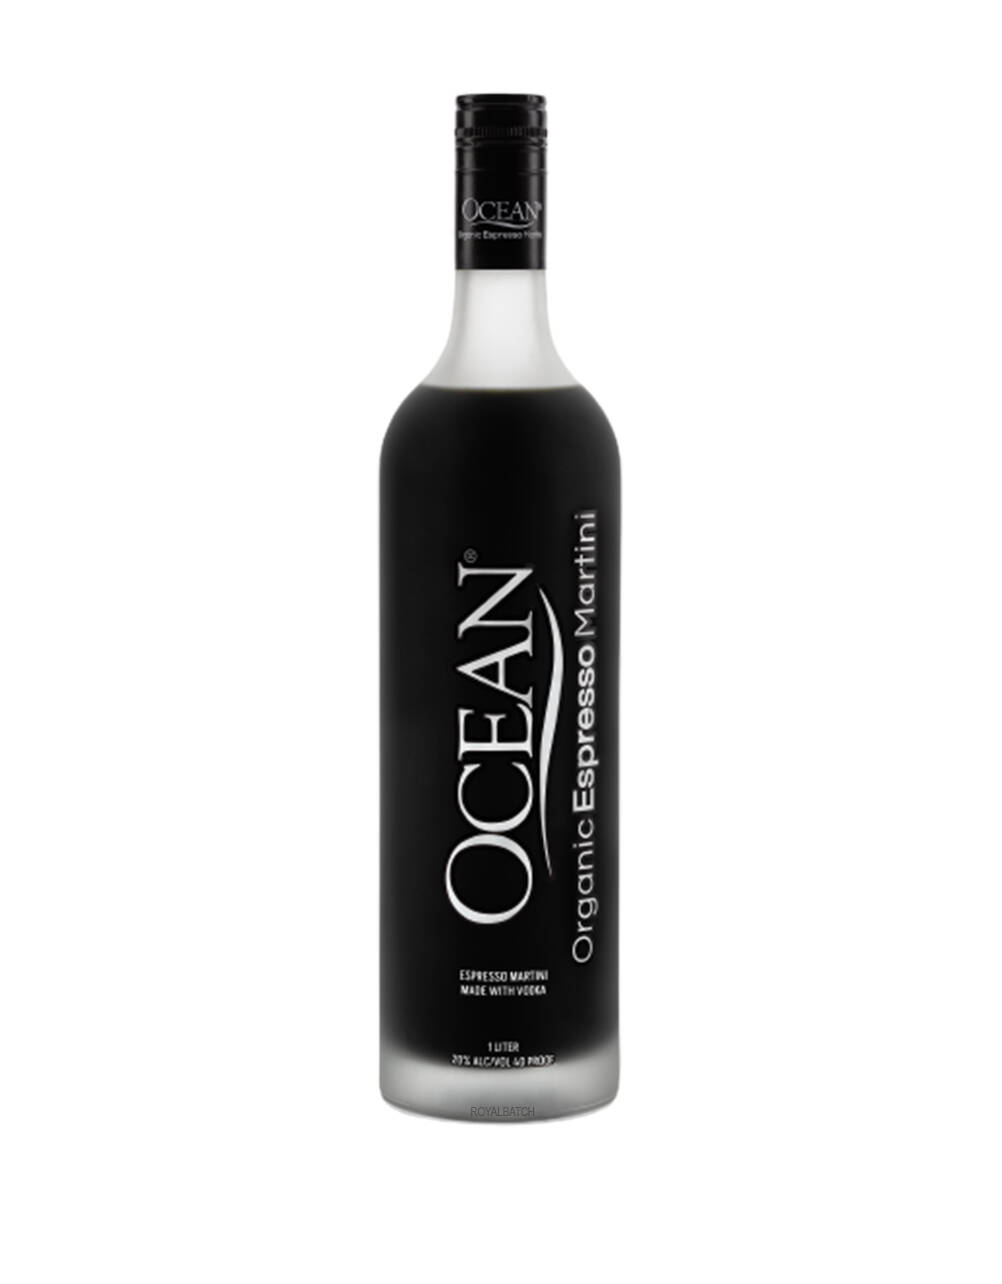 Ocean Organic Espresso Martini Vodka